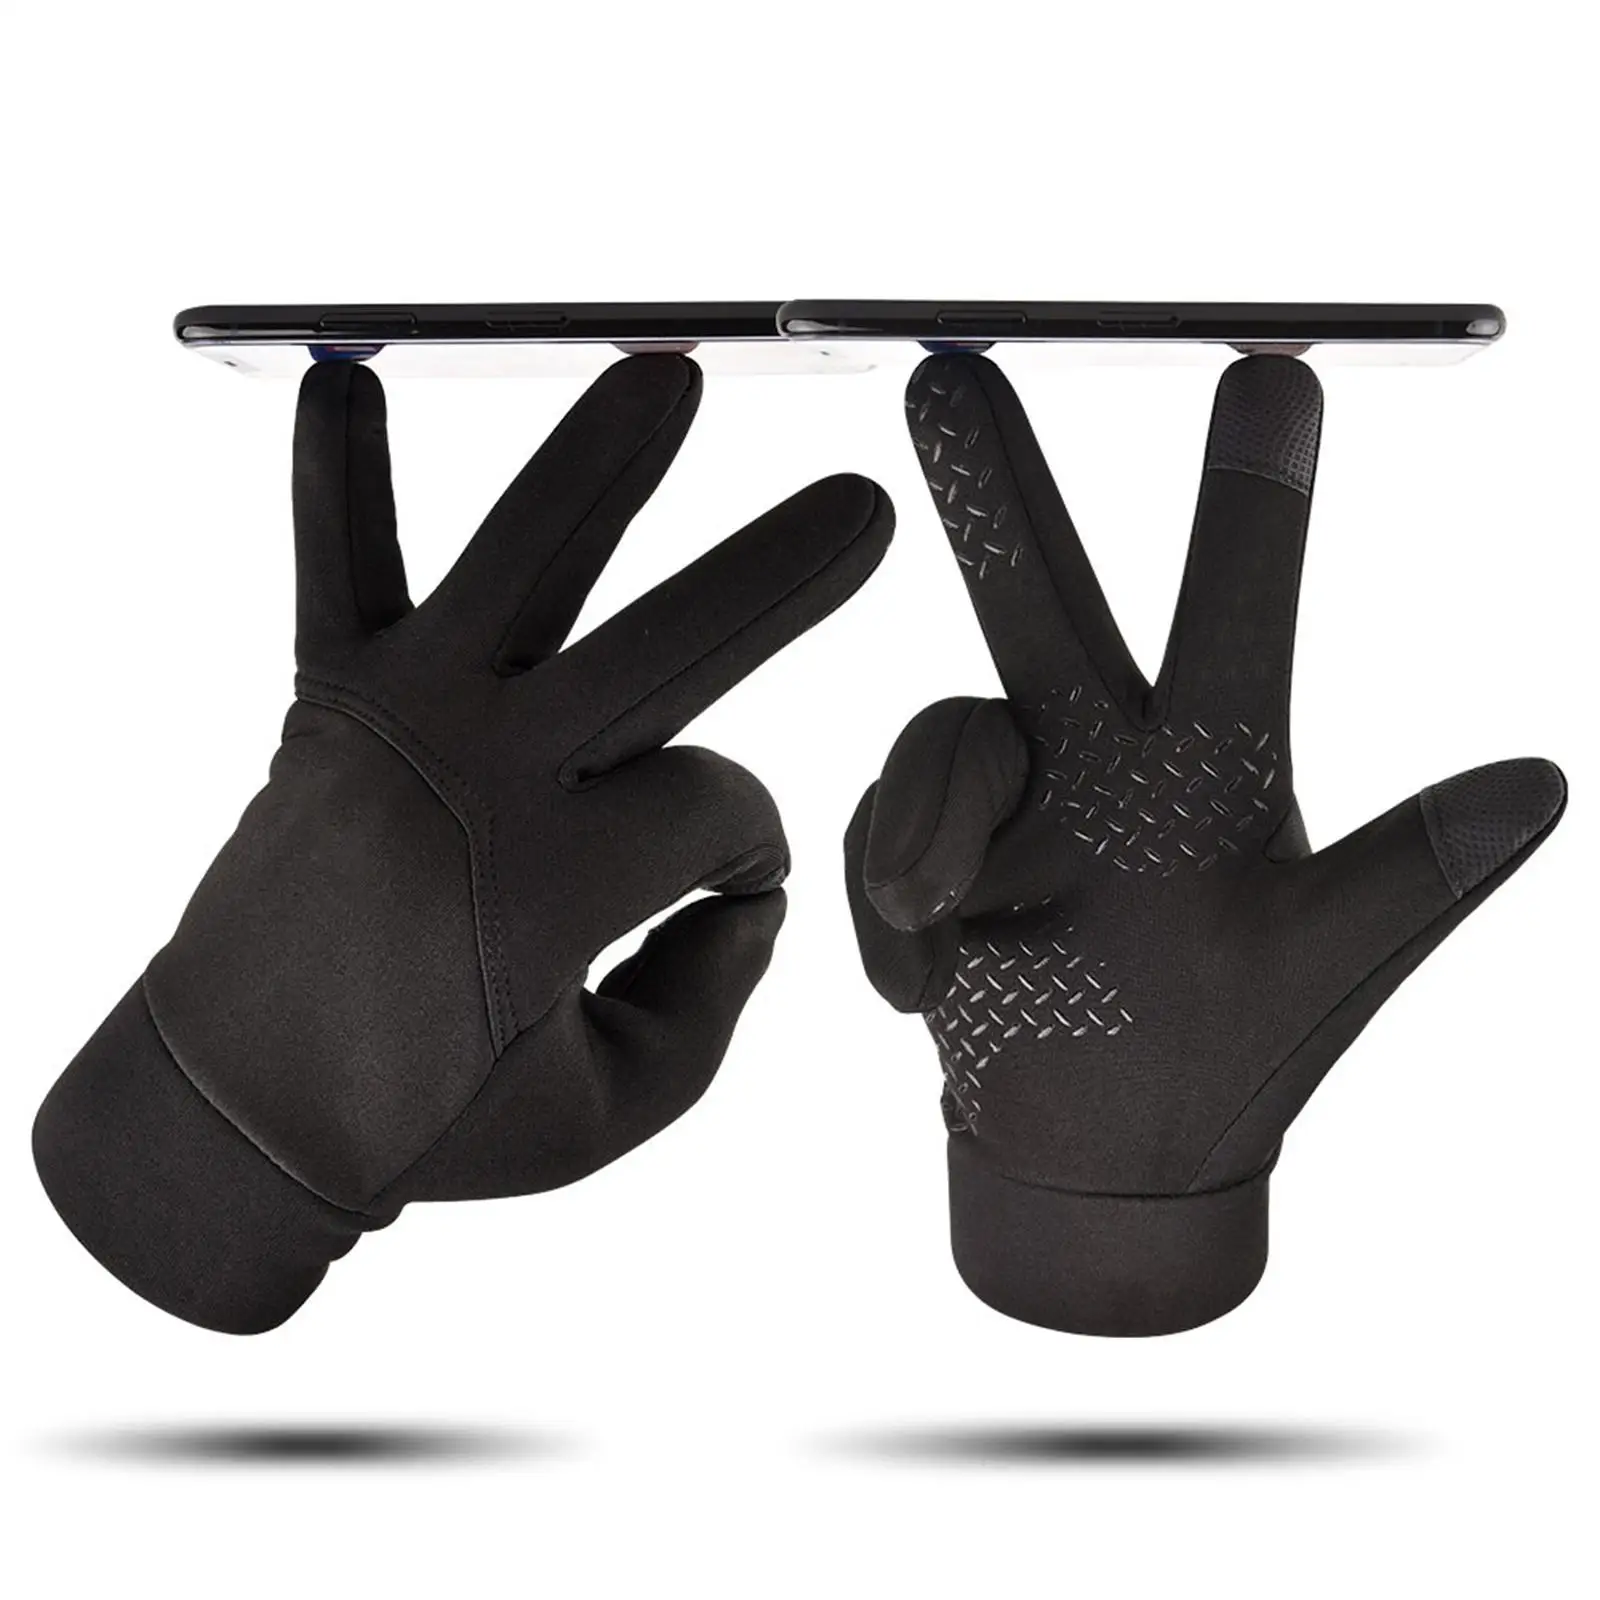 Windproof Waterproof Winter Gloves for Skiing  Apparel Accessories